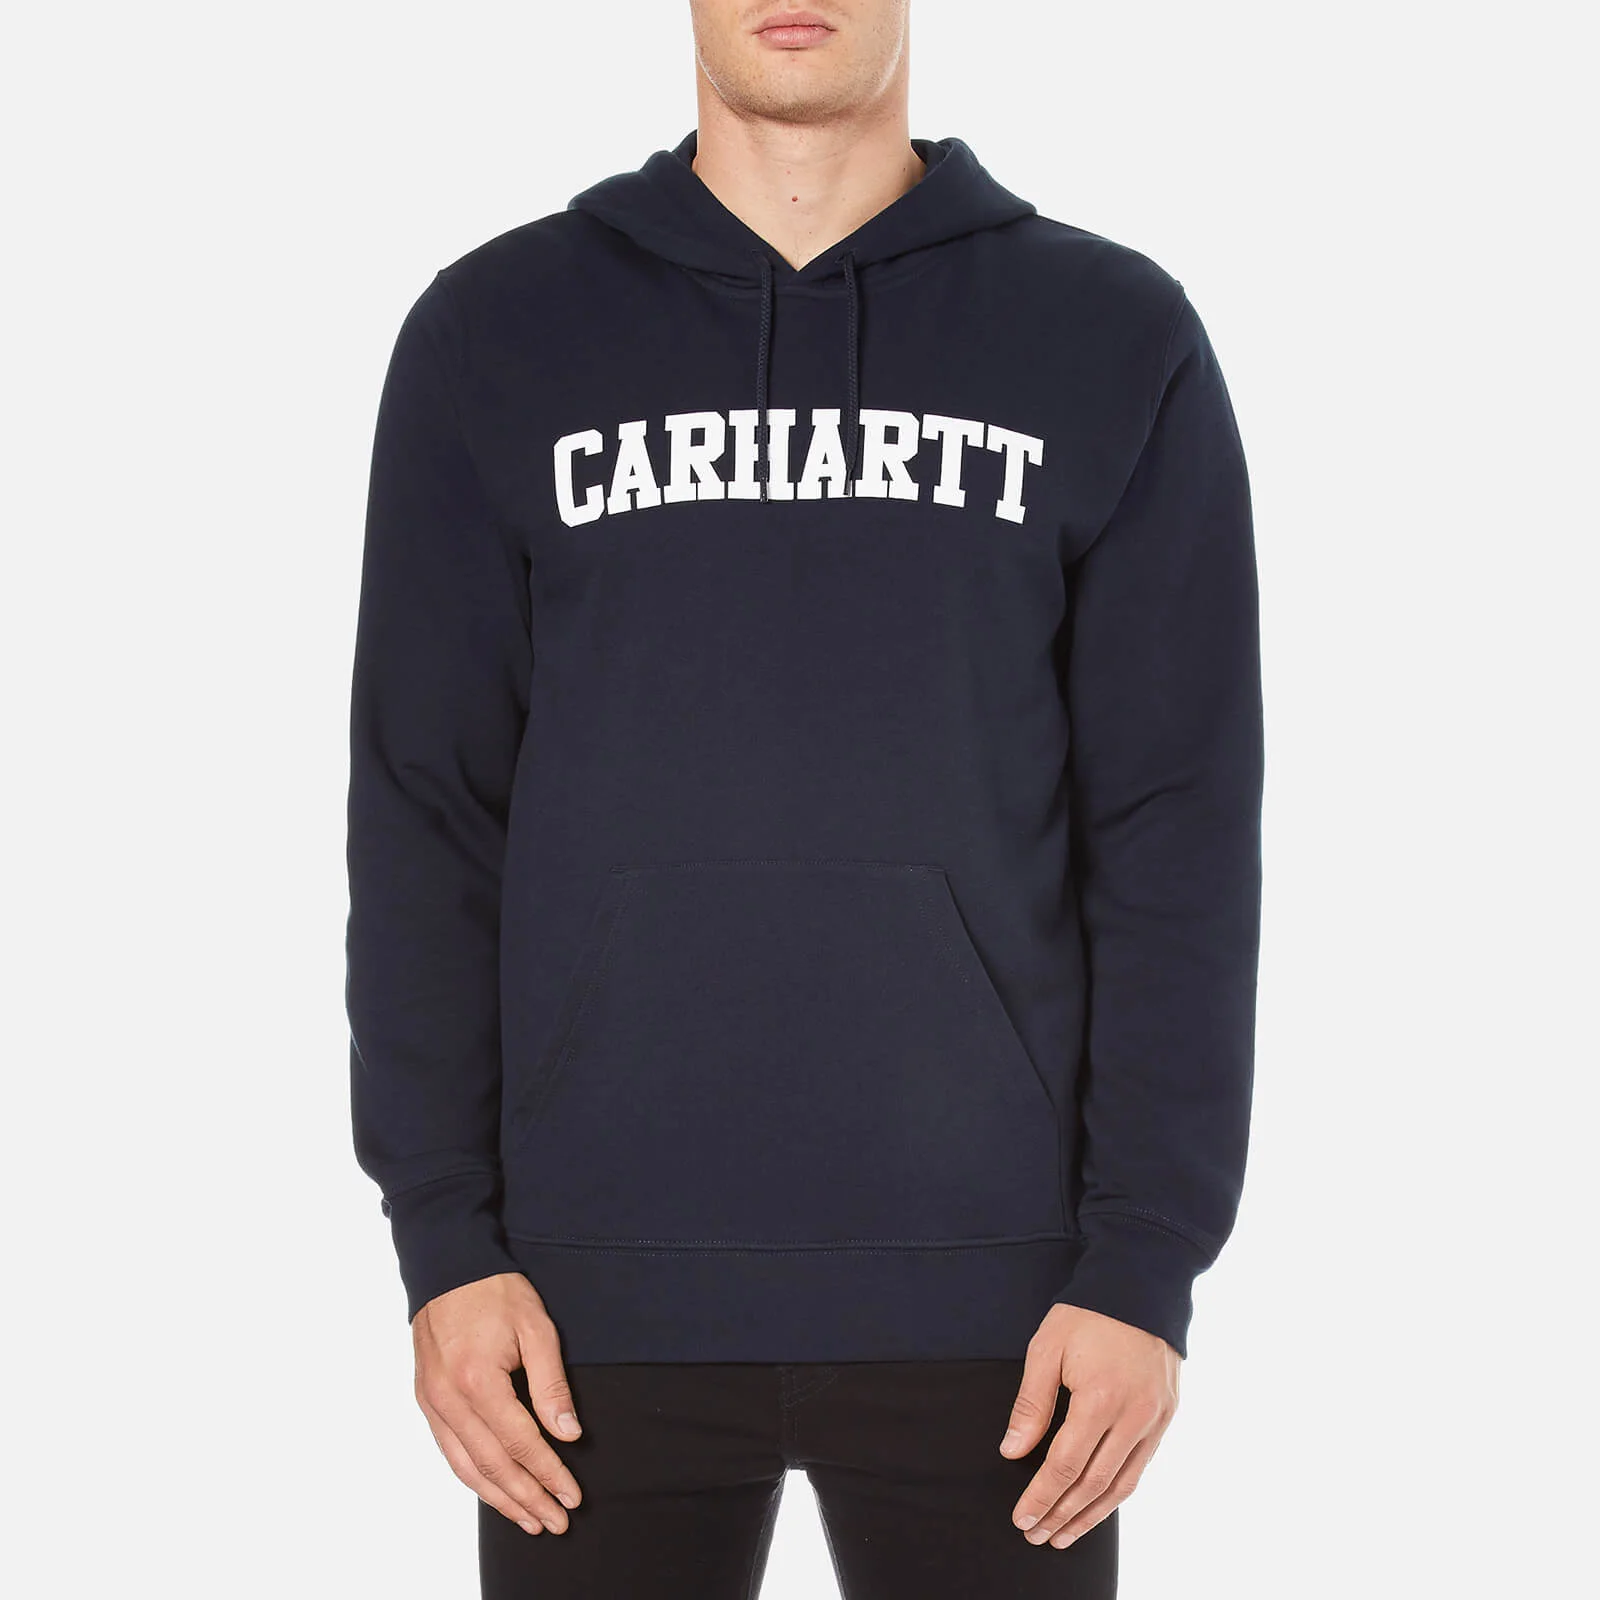 Carhartt Men's Hooded College Sweatshirt - Navy/White Image 1